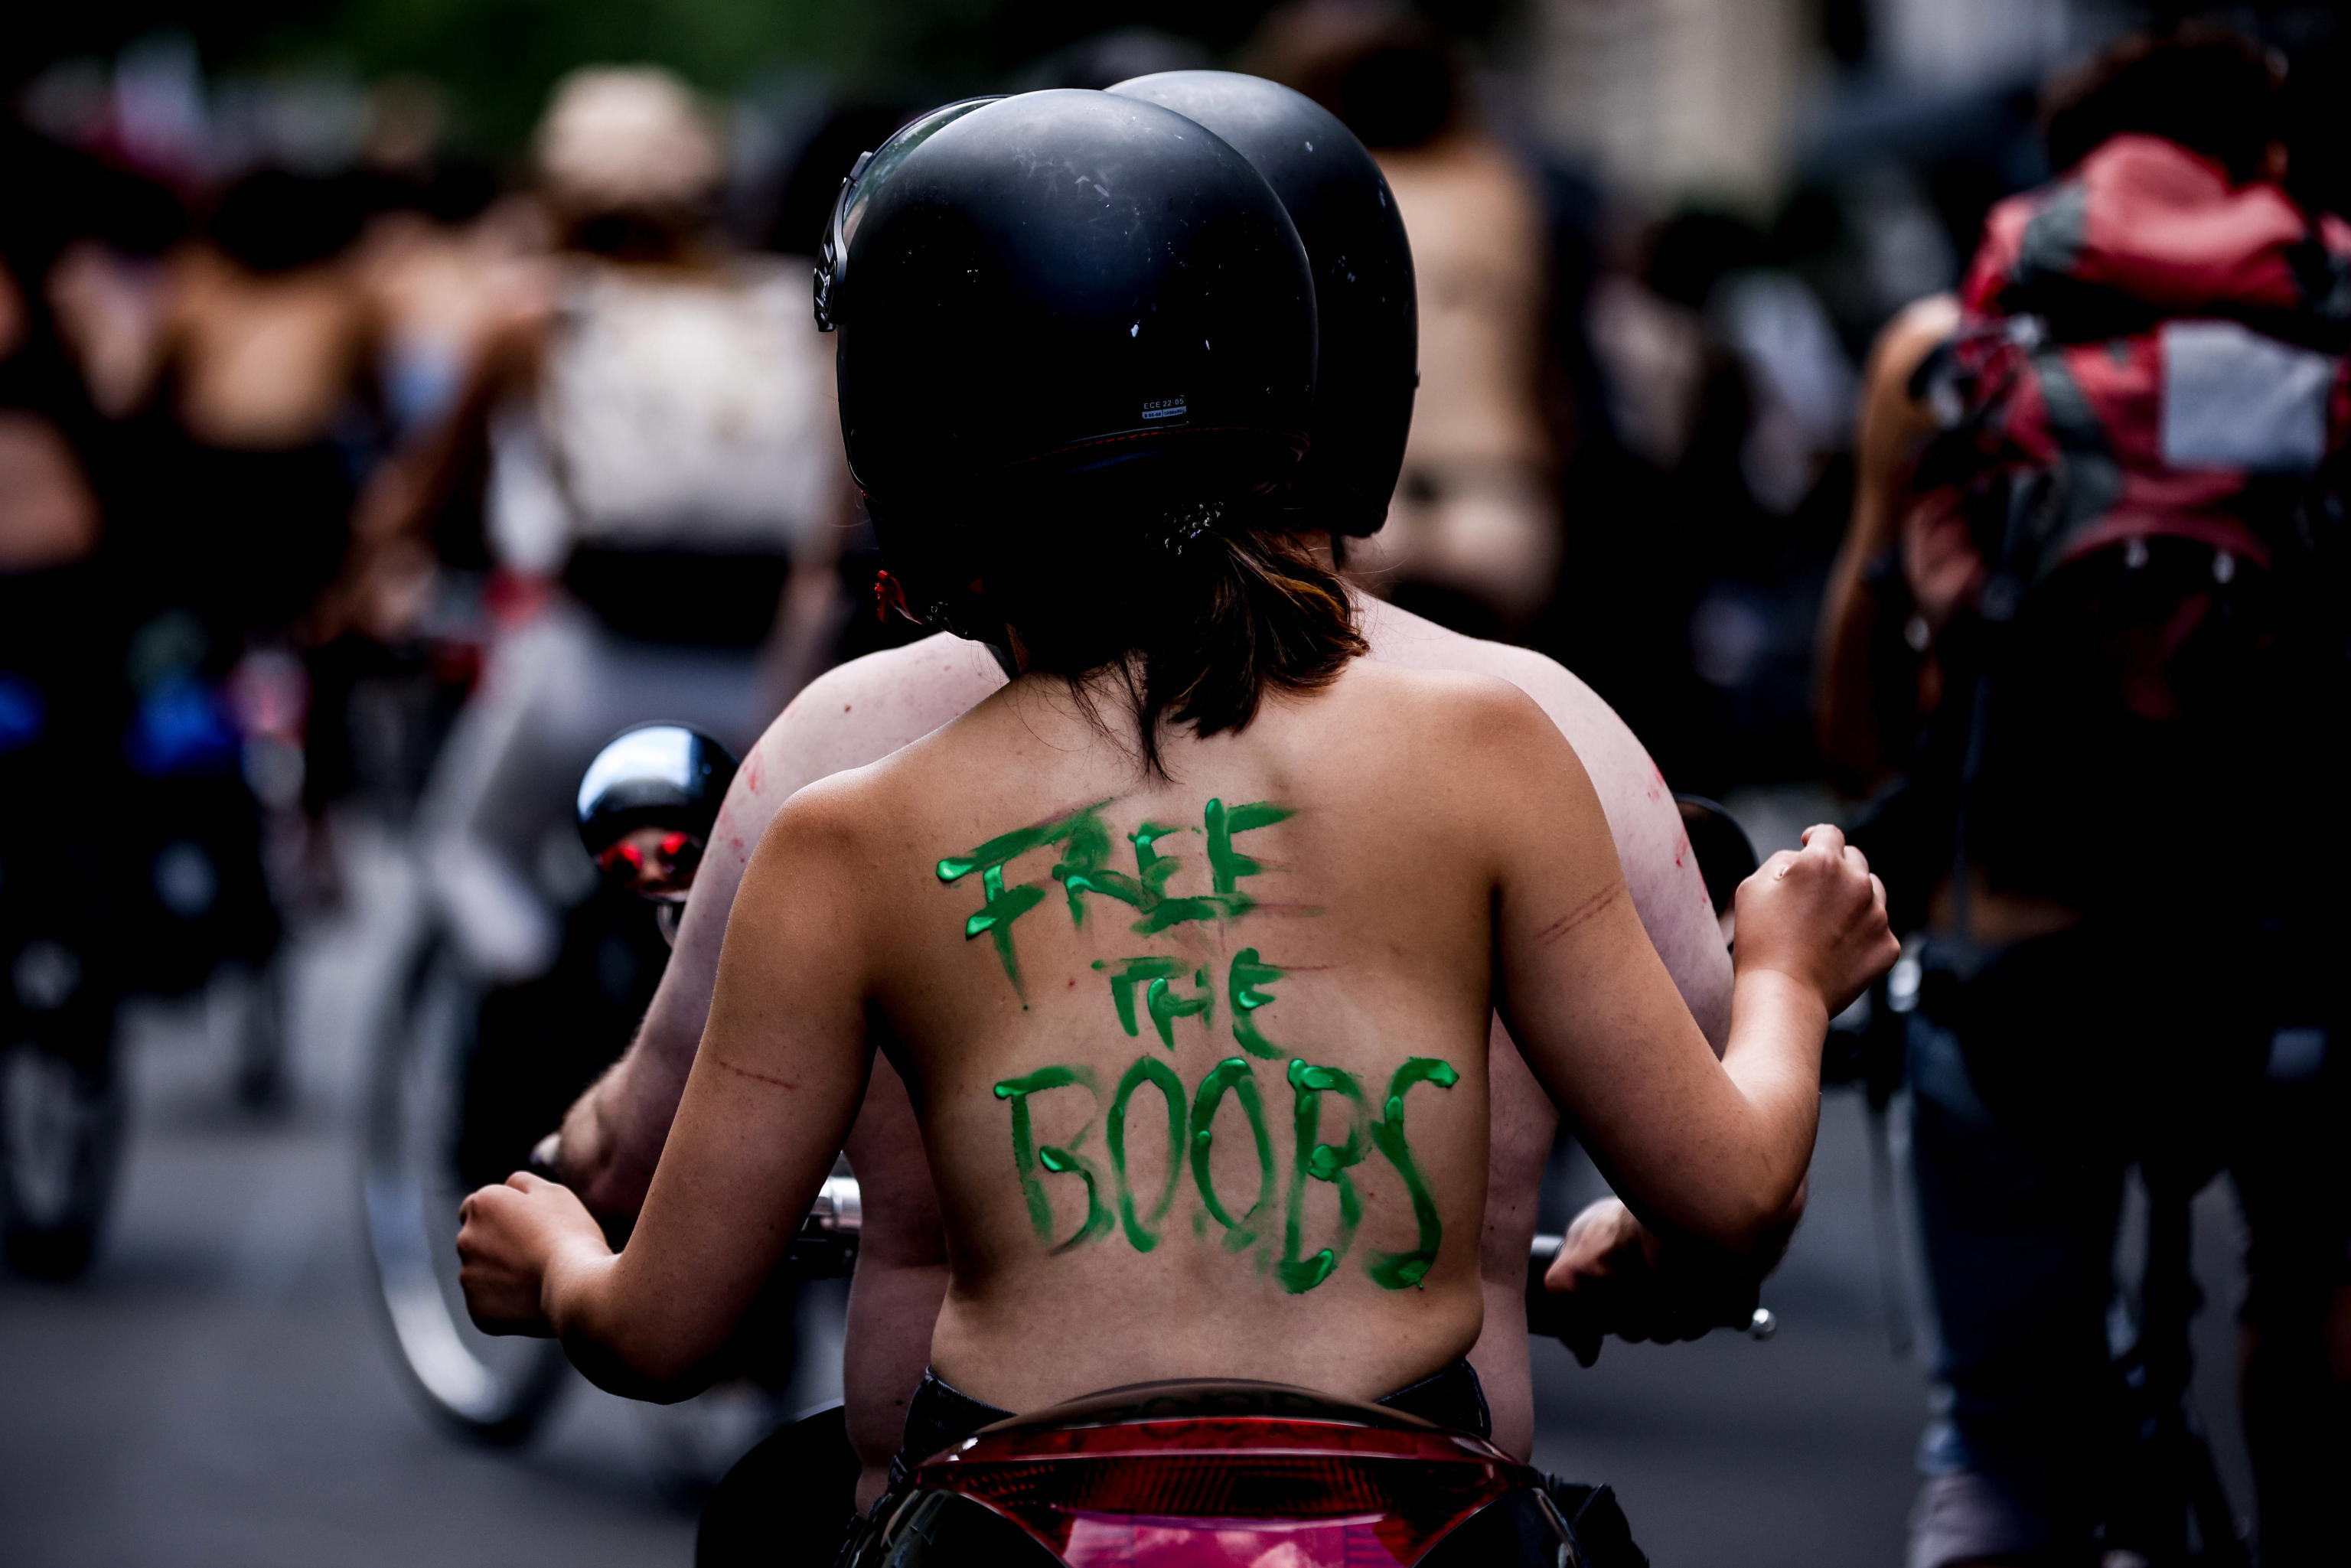 free the boobs